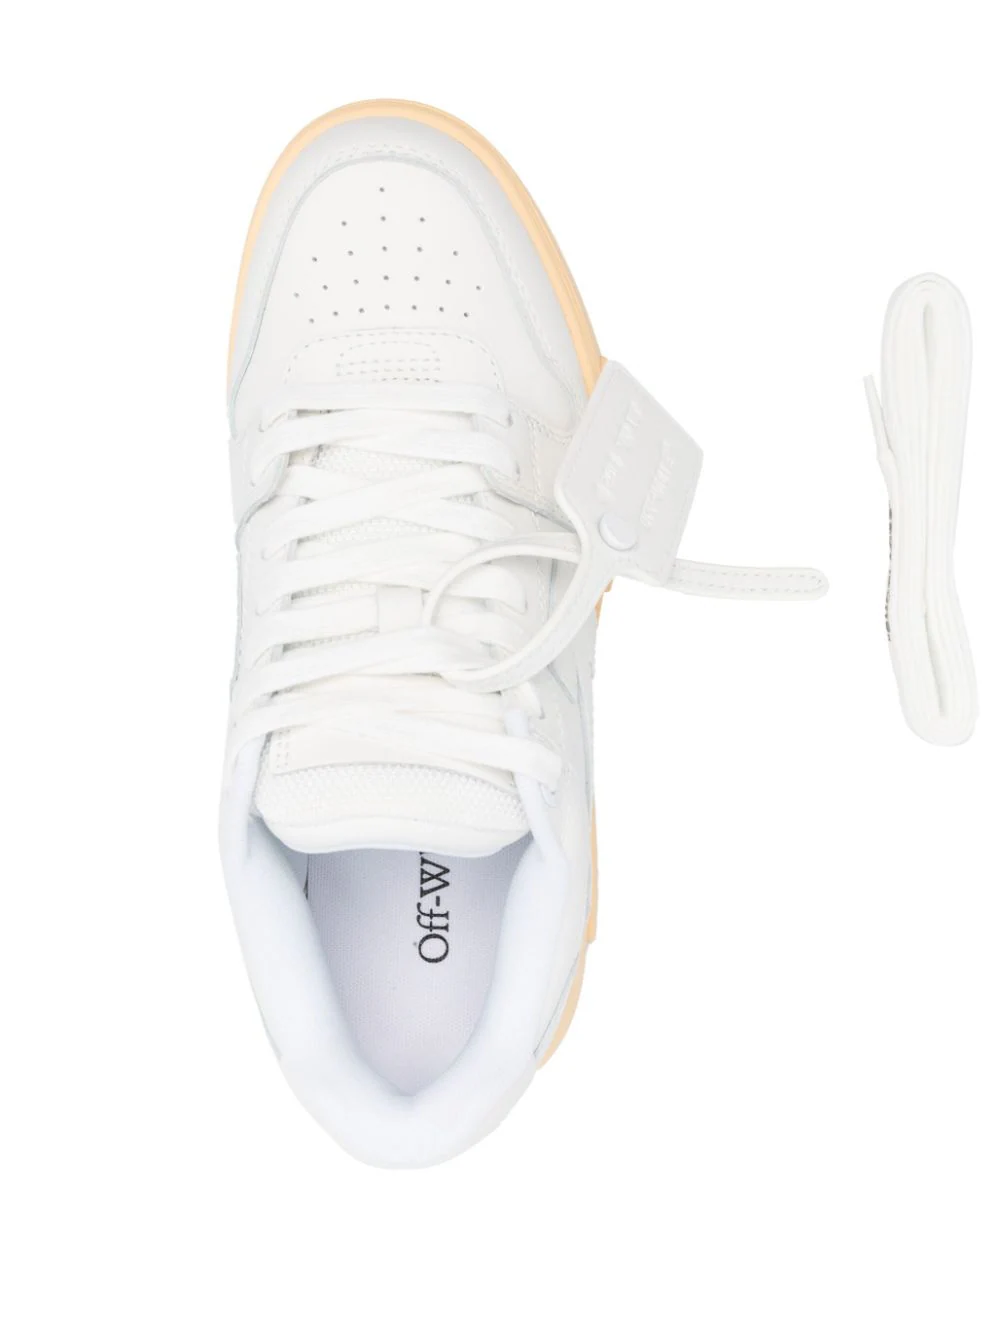 Off-White Virgil Abloh Arrow Women's Sneakers Size 36 EU / 6